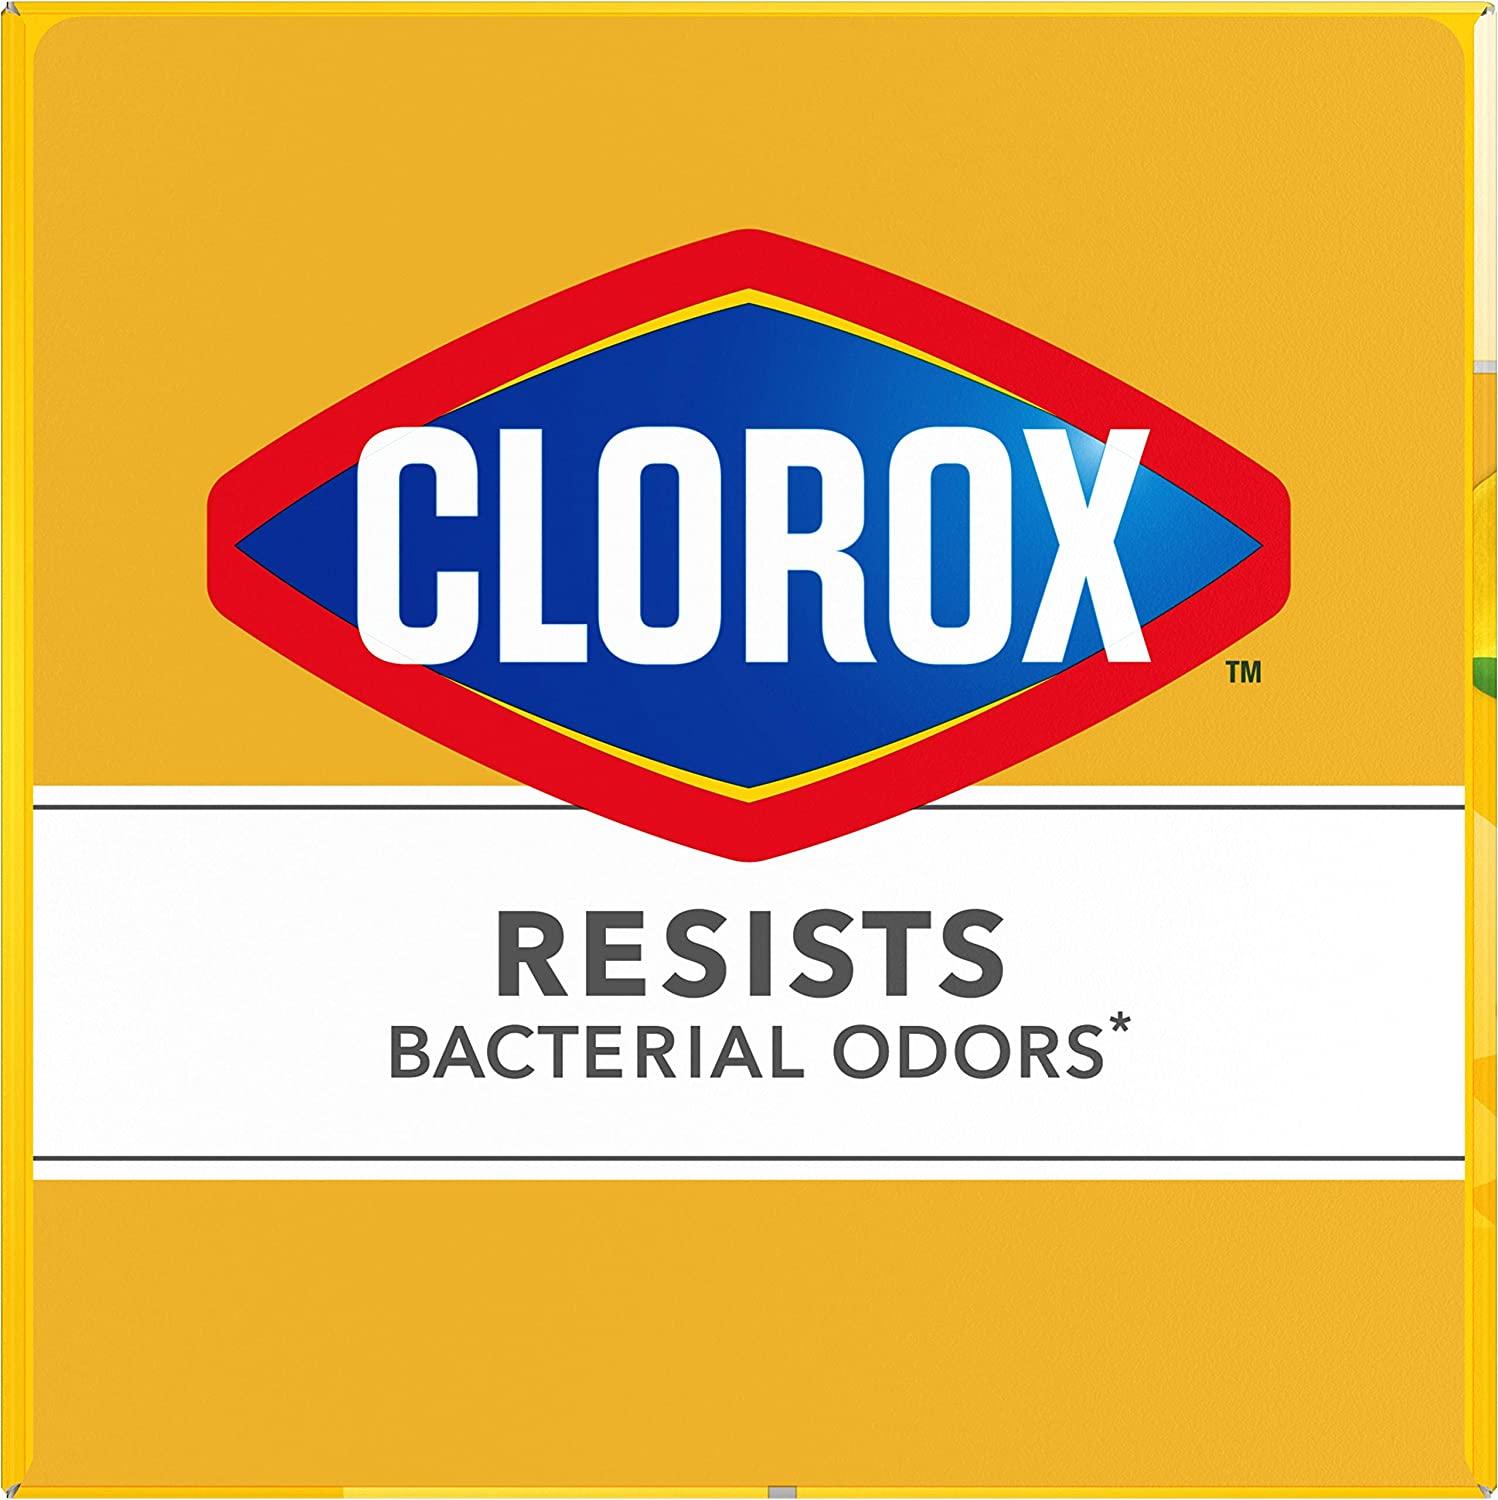  Glad Medium Drawstring Trash Bags with Clorox, 8 Gallon, Lemon  Fresh Bleach Scent, 26 Count : Health & Household